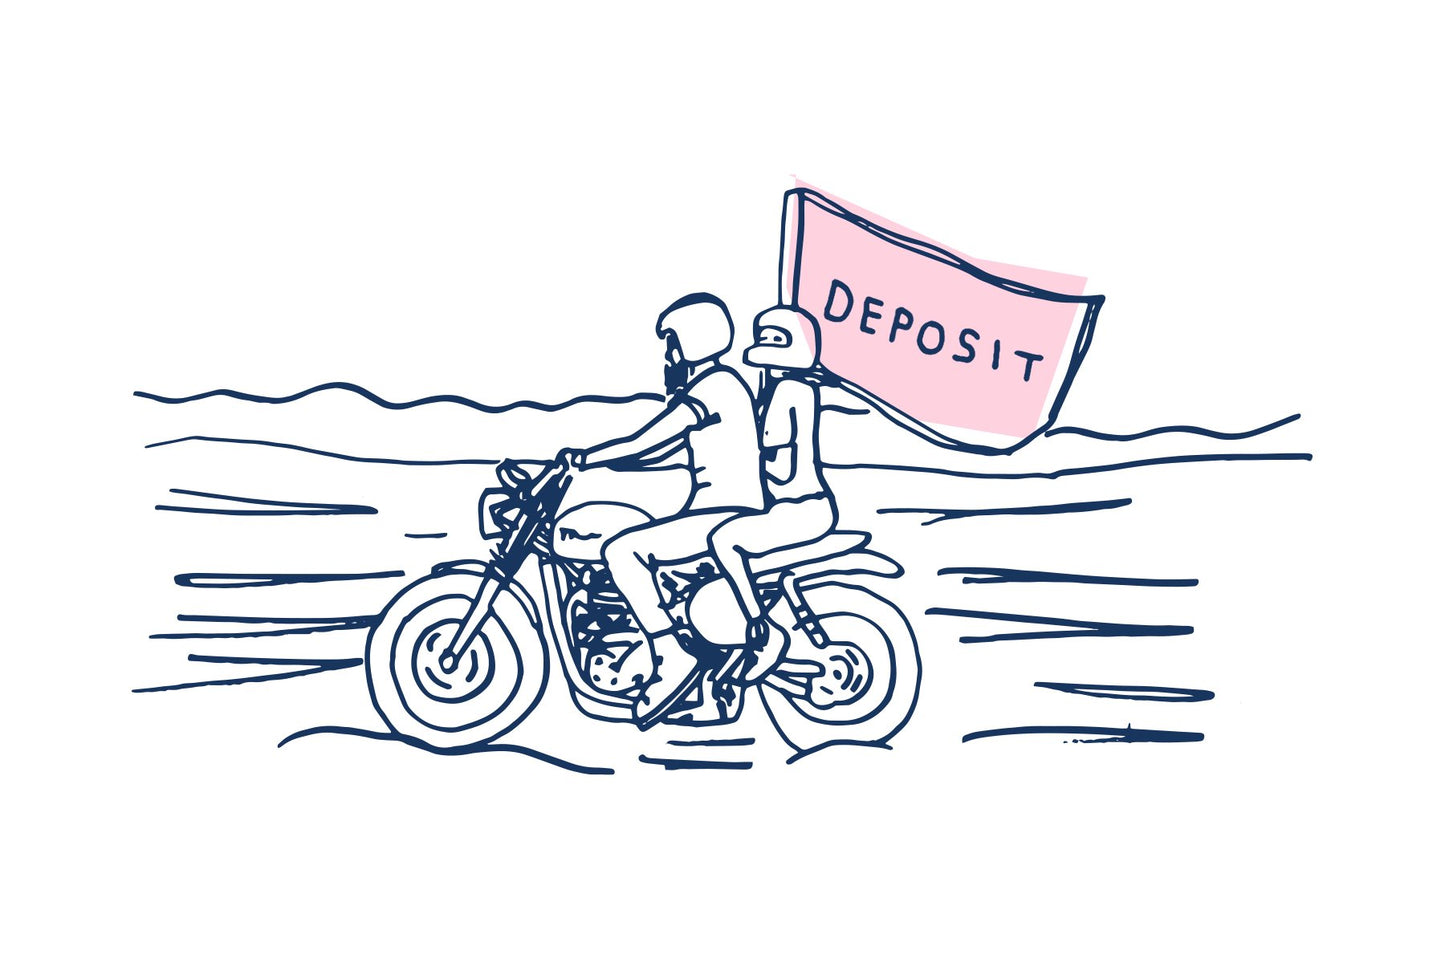 Design Deposit - PS